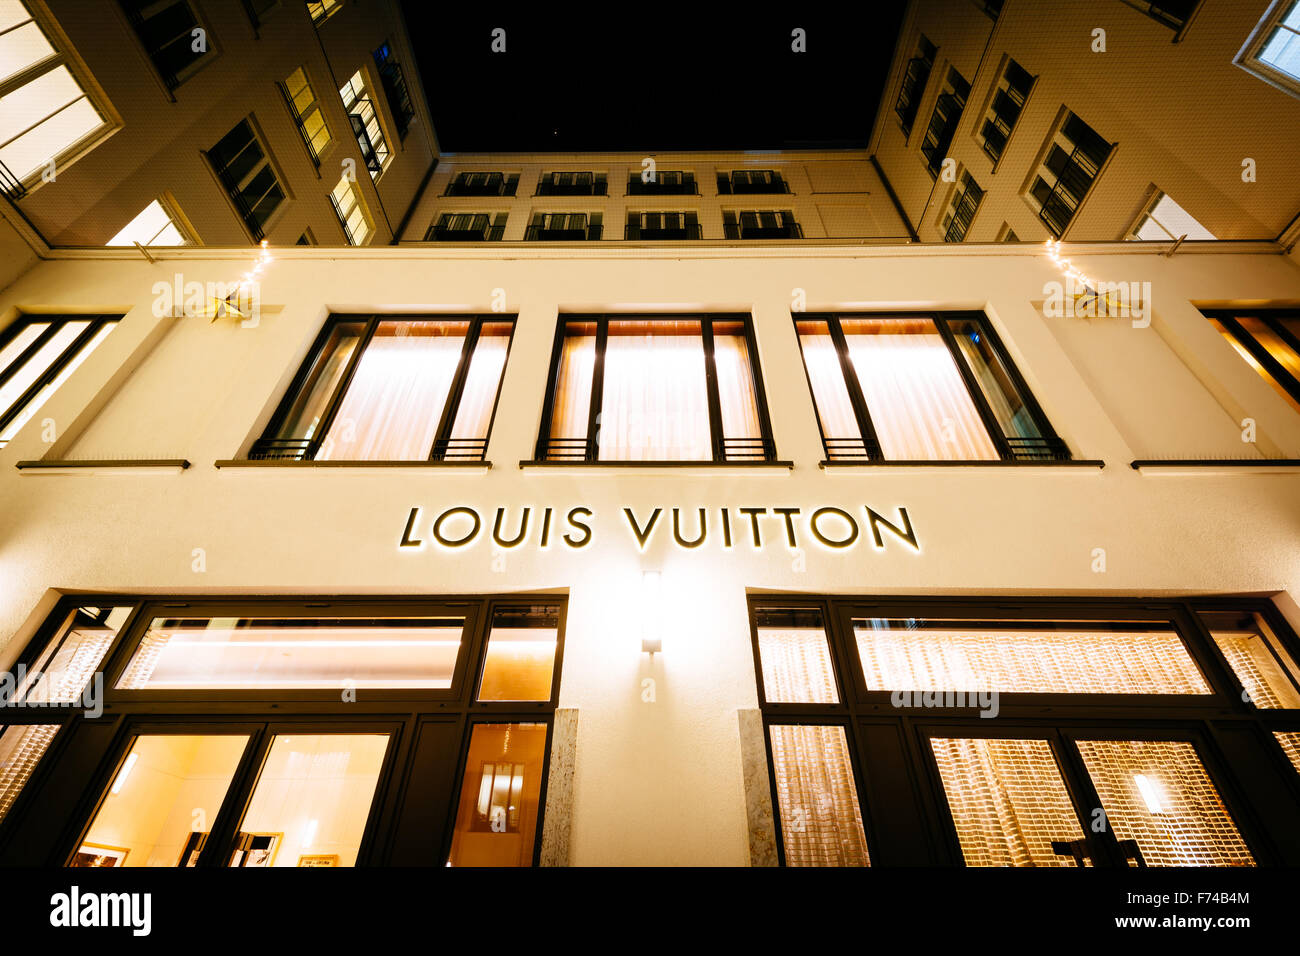 Louis Vuitton shop in Vienna, Austria Stock Photo - Alamy